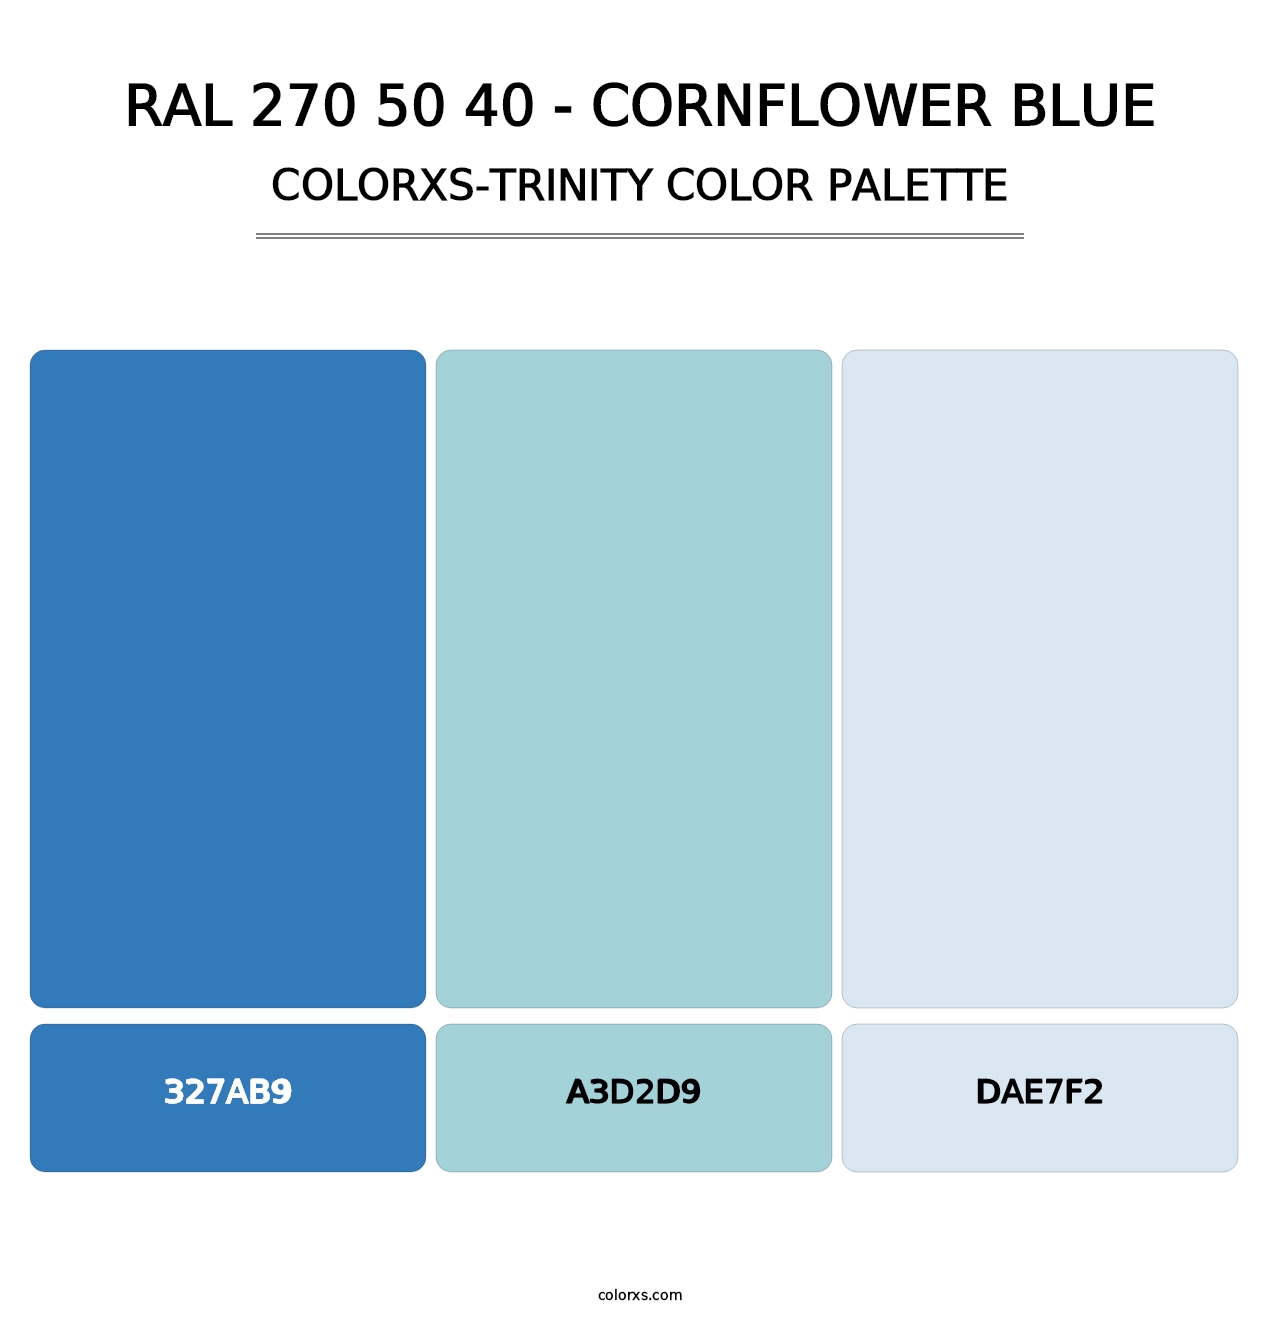 RAL 270 50 40 - Cornflower Blue - Colorxs Trinity Palette